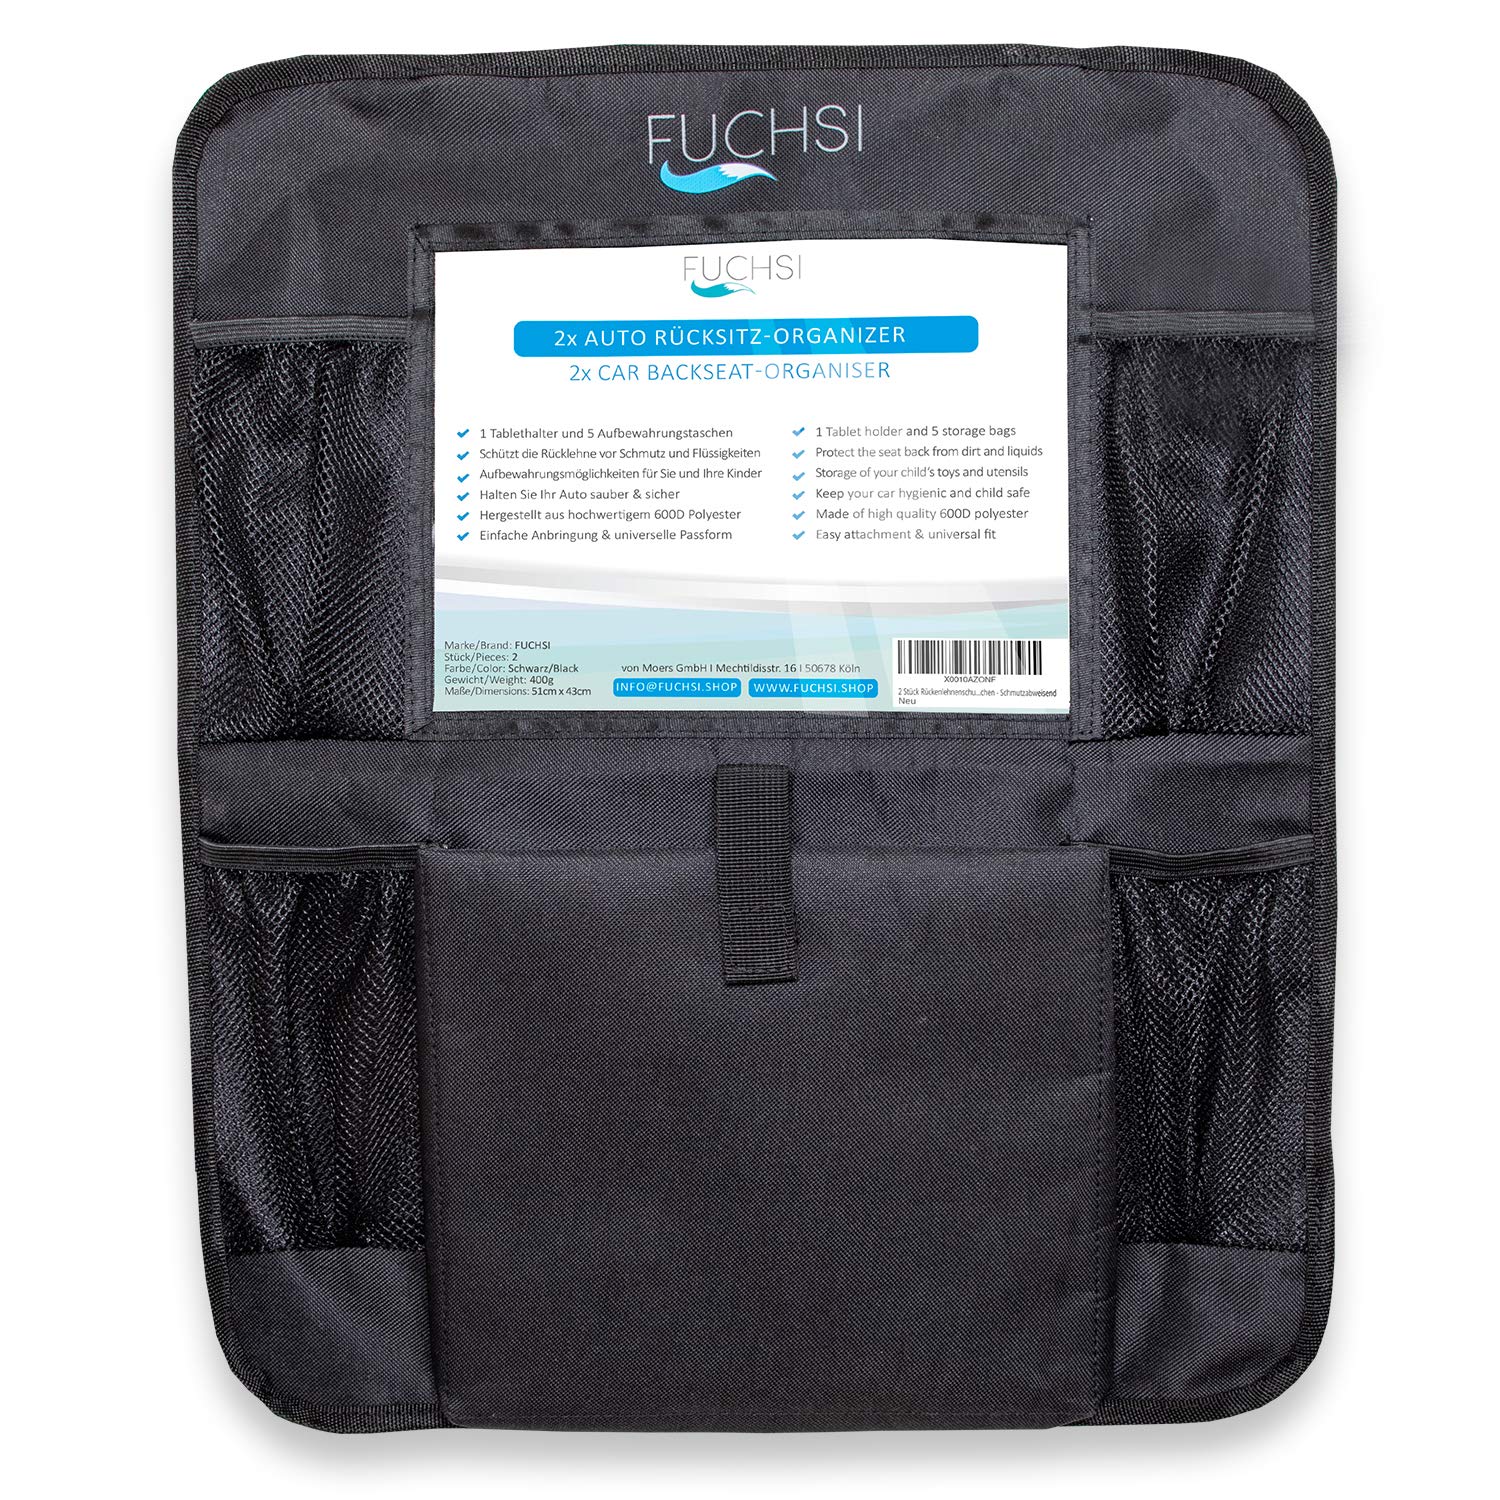 2 STÜCK - FUCHSI Rücksitz Organizer für Kinder mit iPad- / Tablet-Fach –  Fuchsi